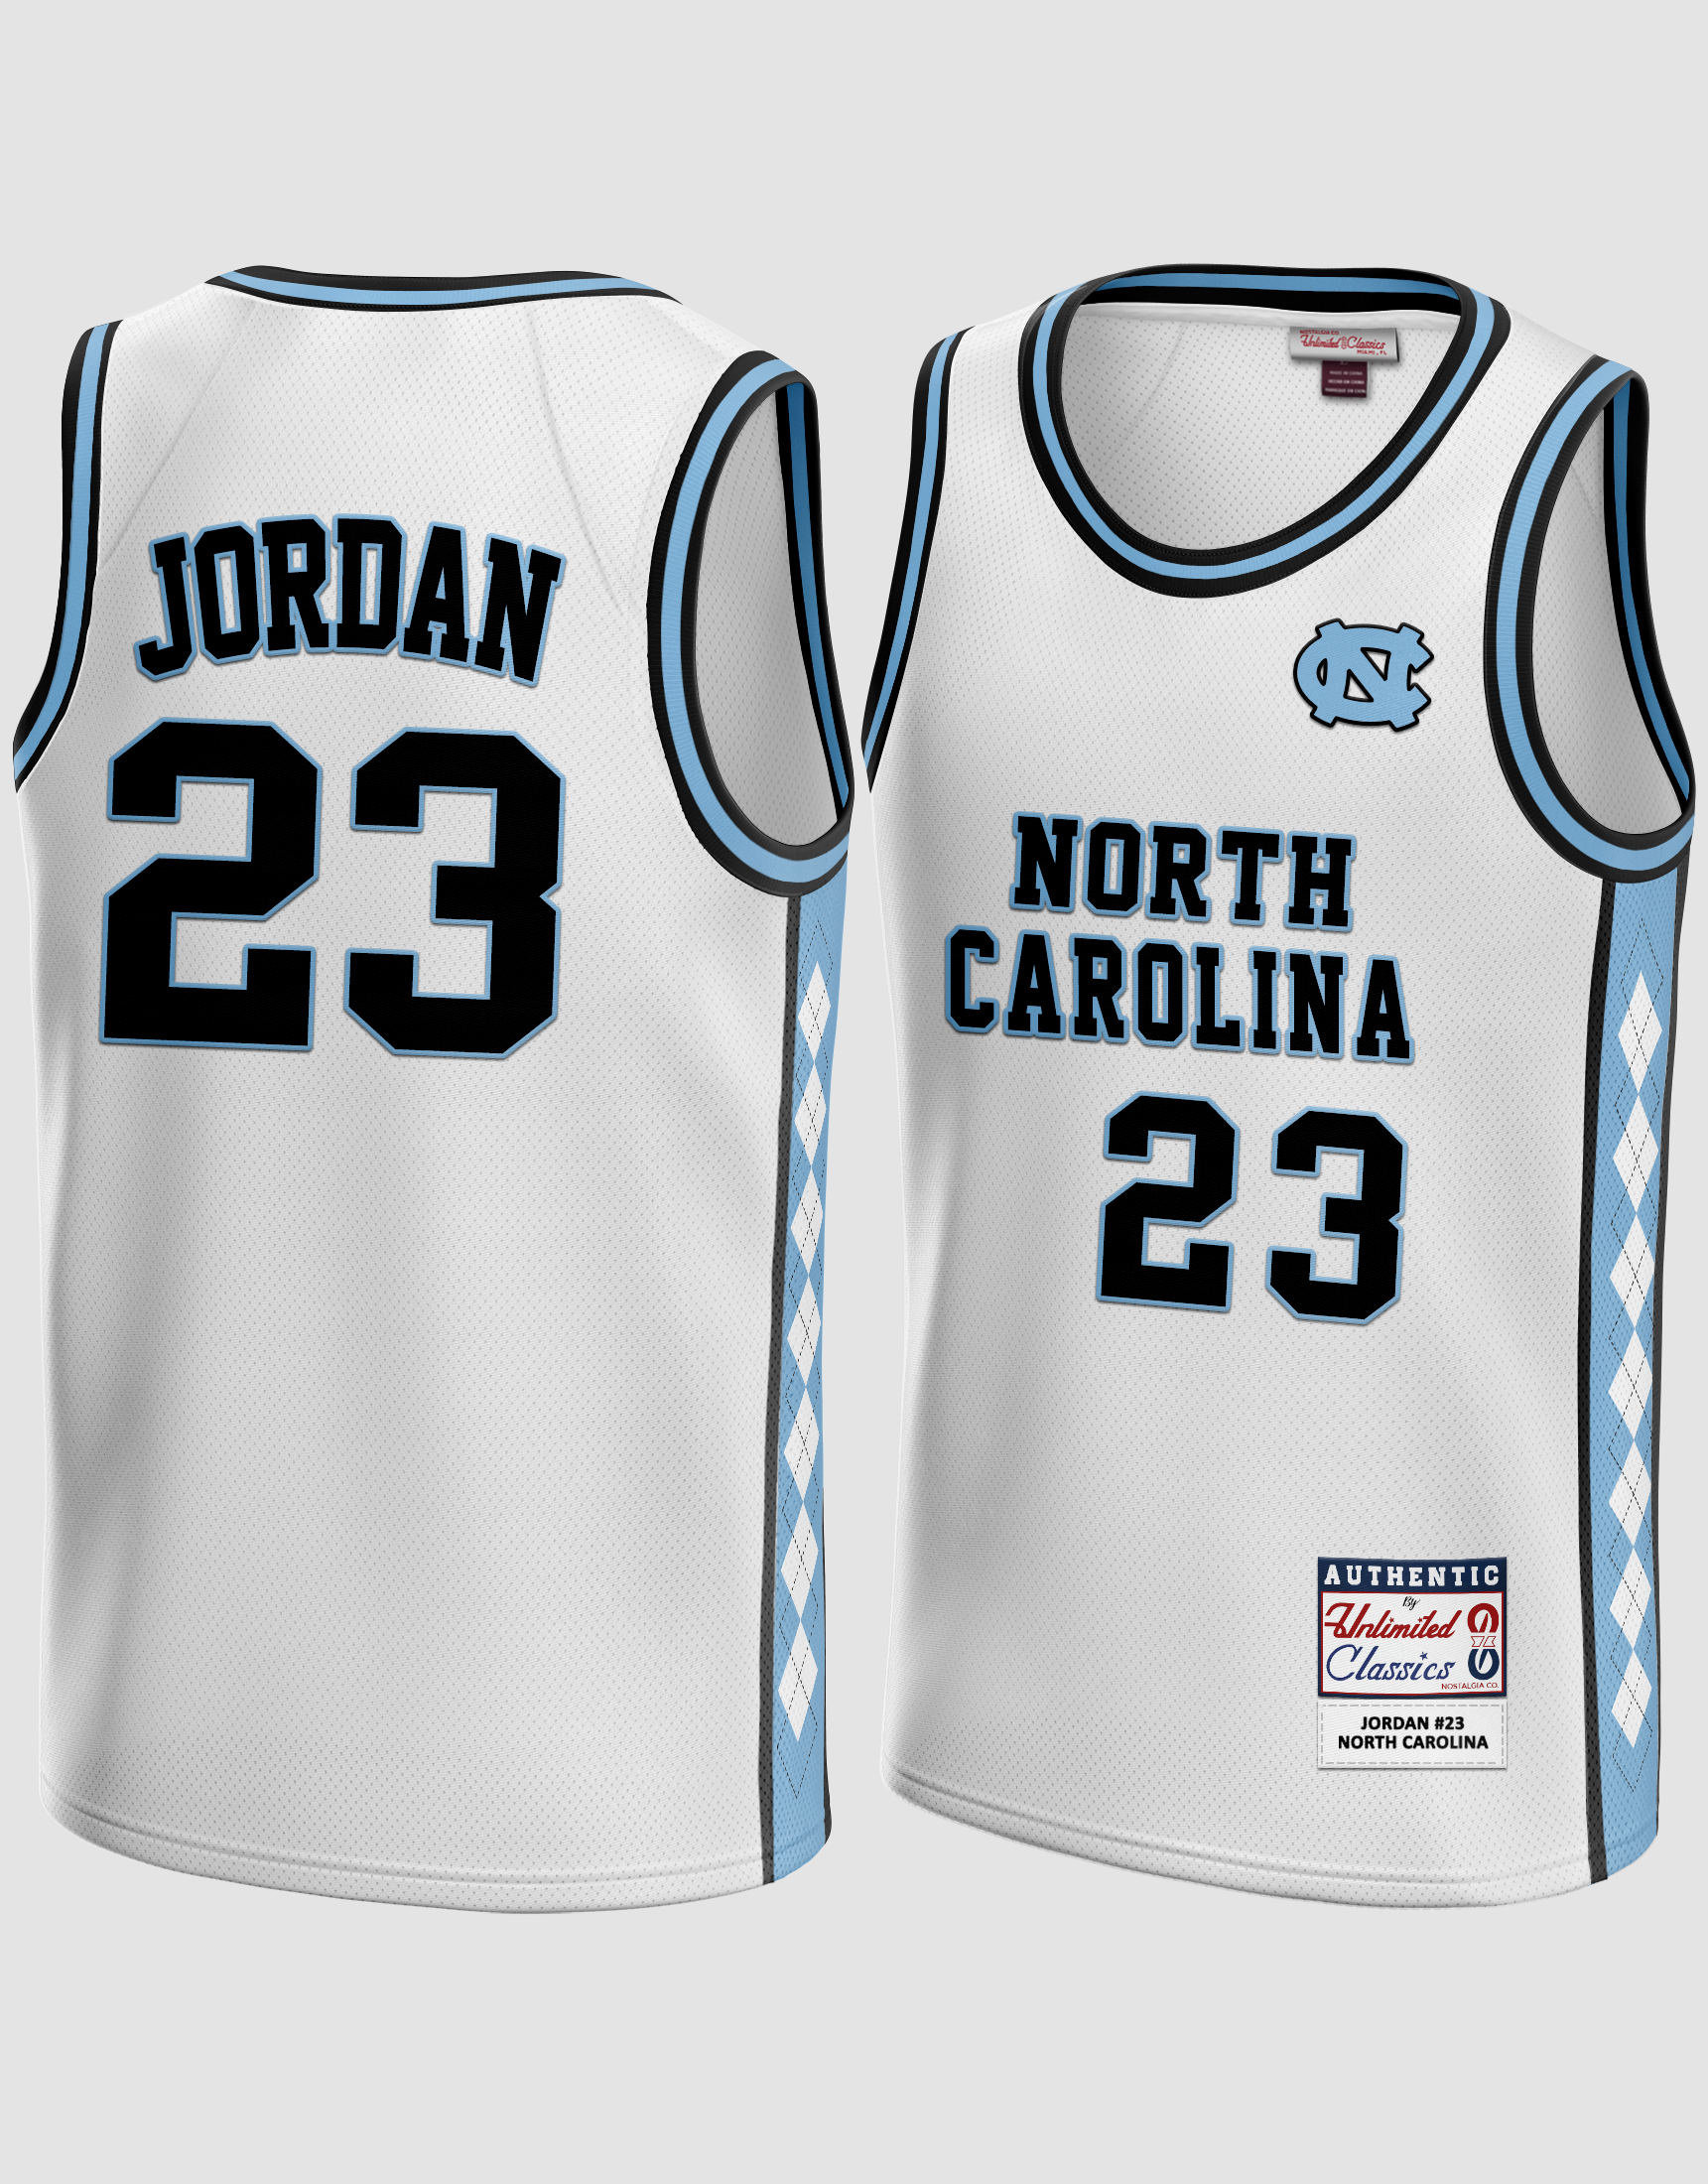 Unlimited Classics North Carolina Michael Jordan #23 White Jersey XL